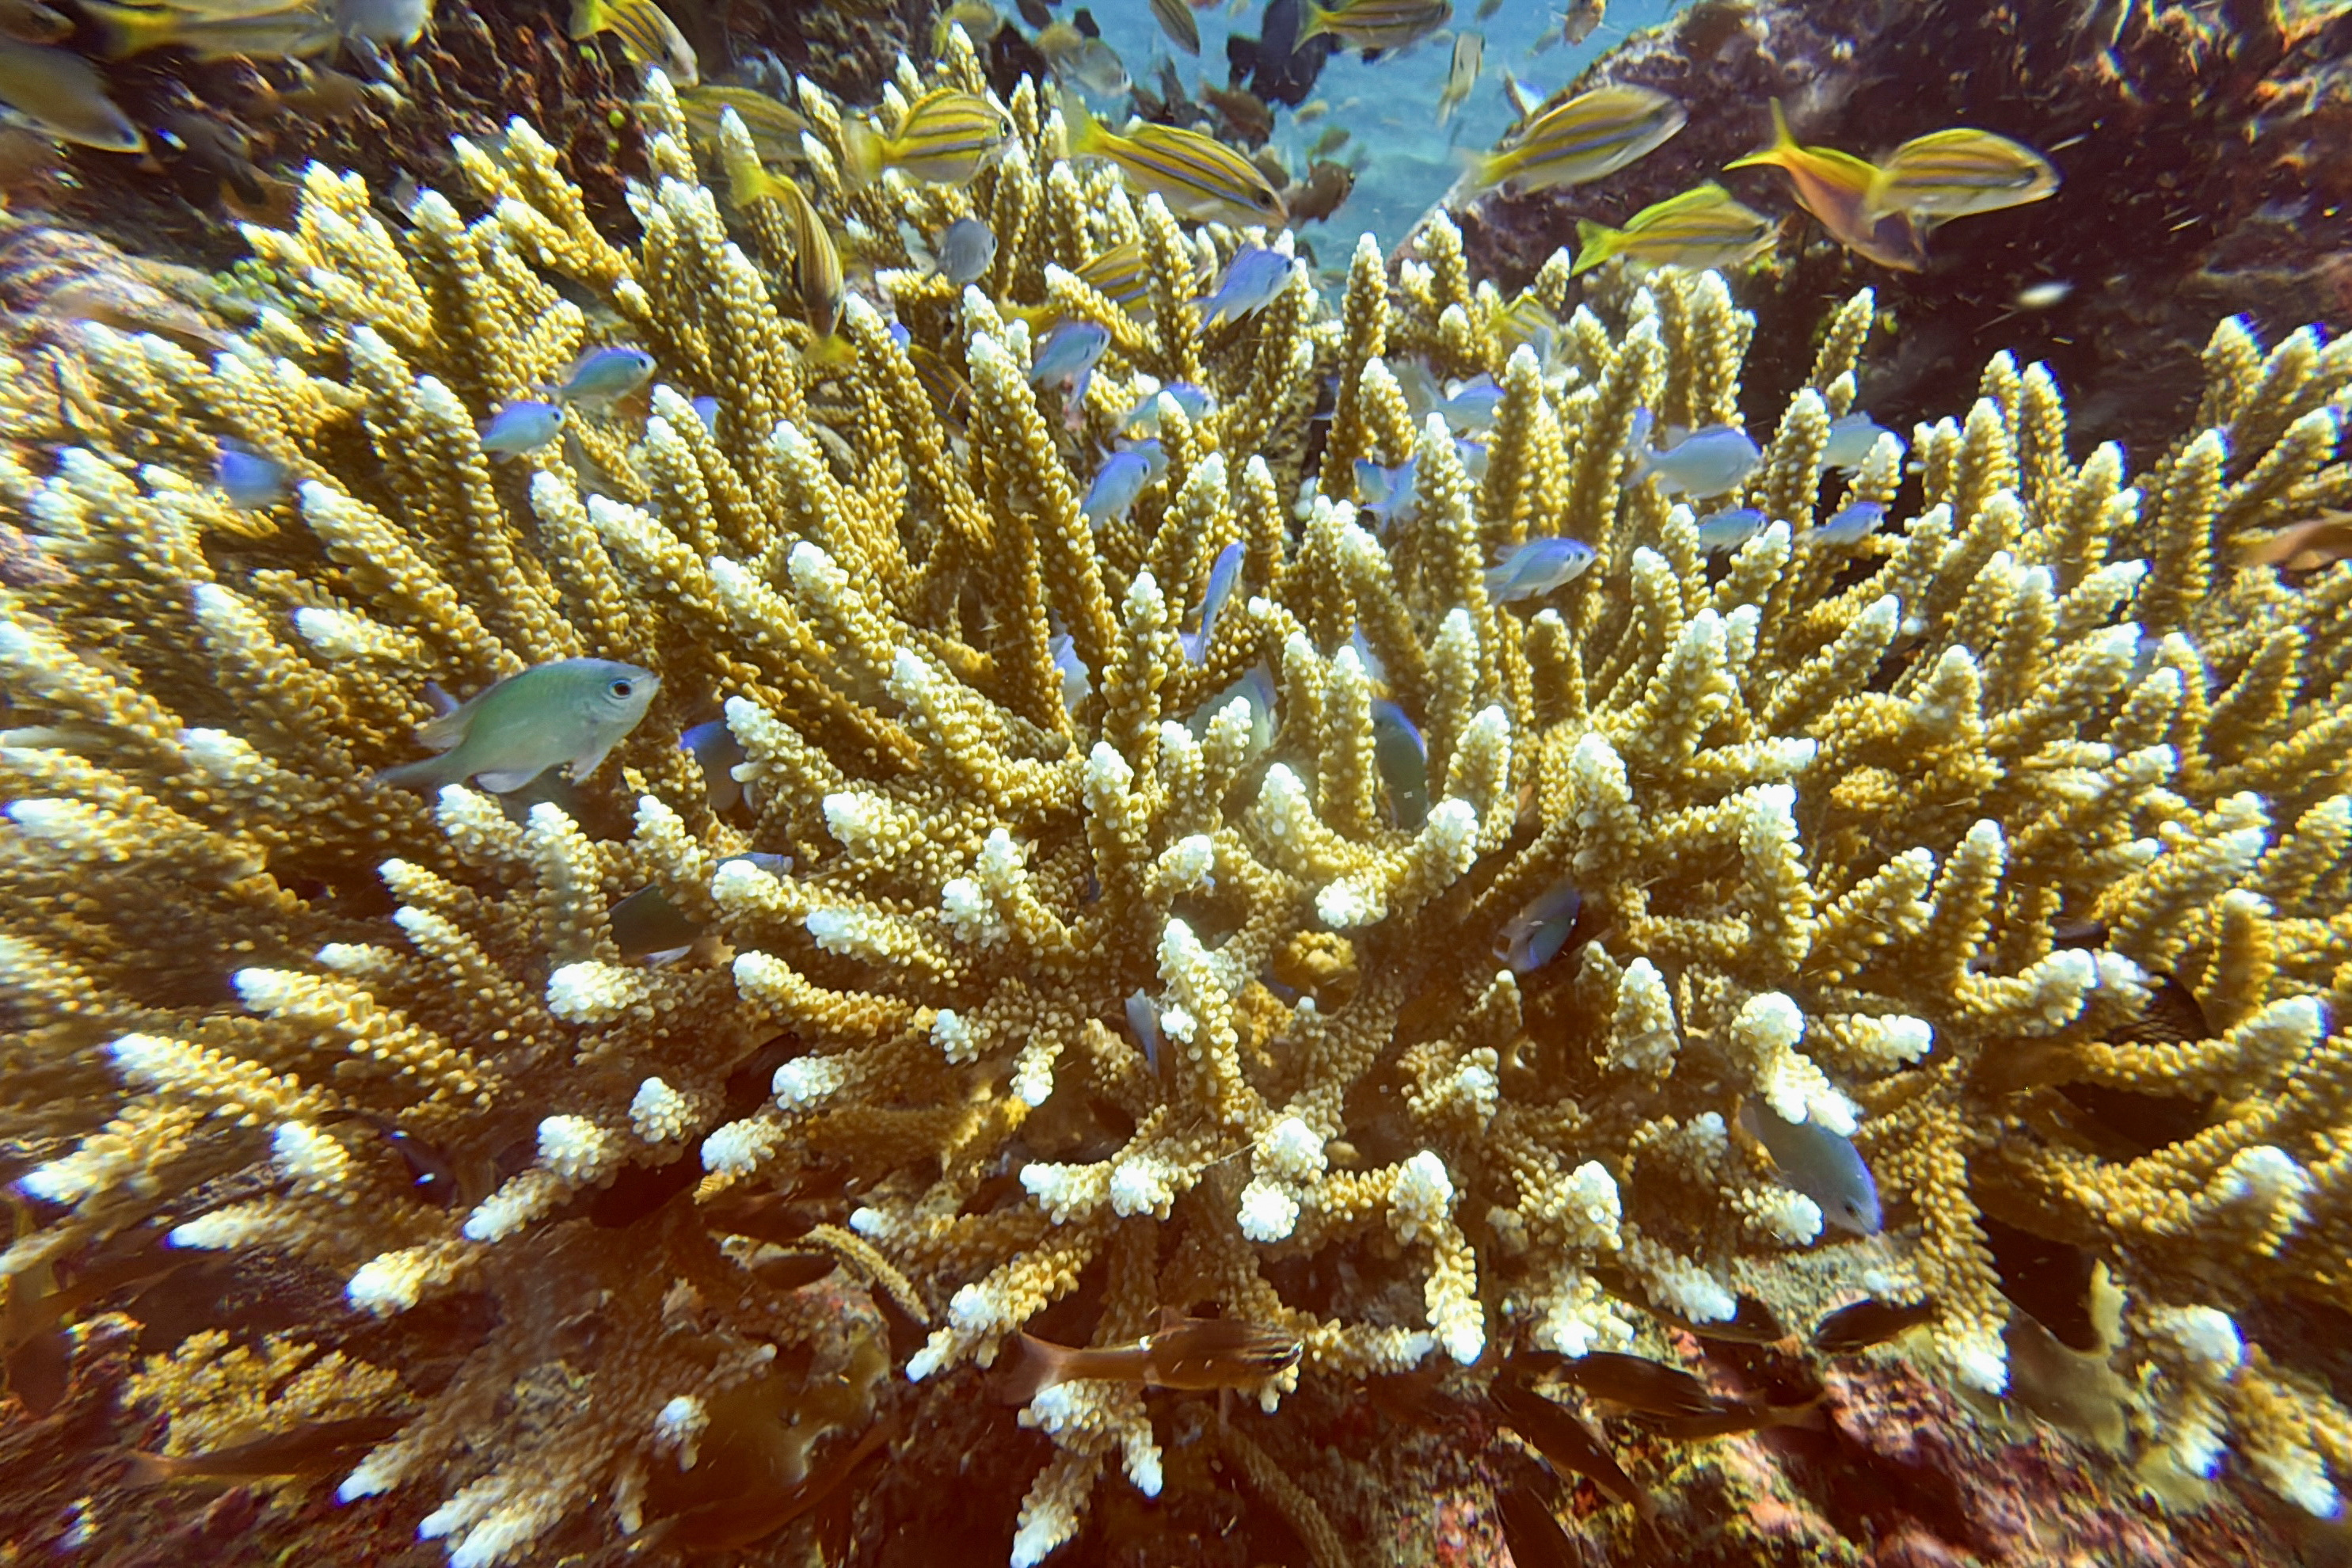 Coral bleaching in Bali